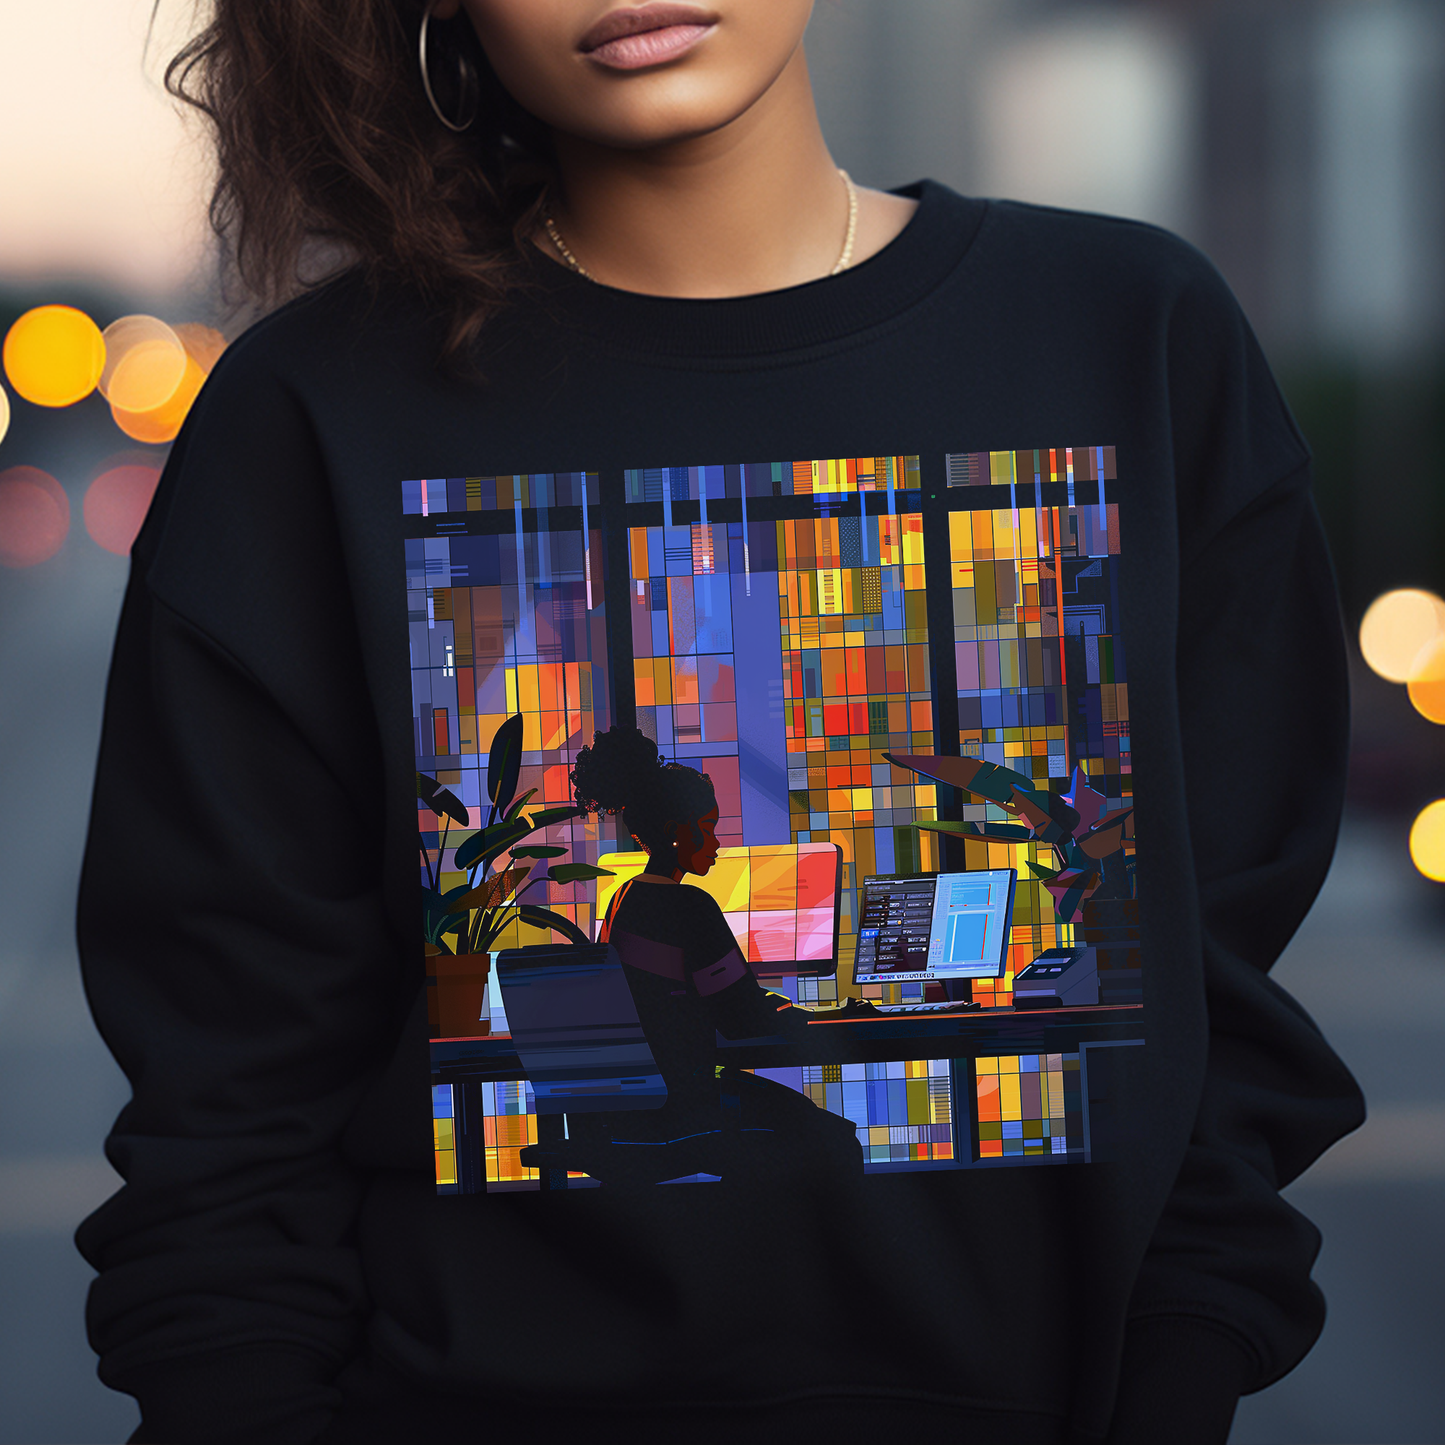 Computer Girl Shirt